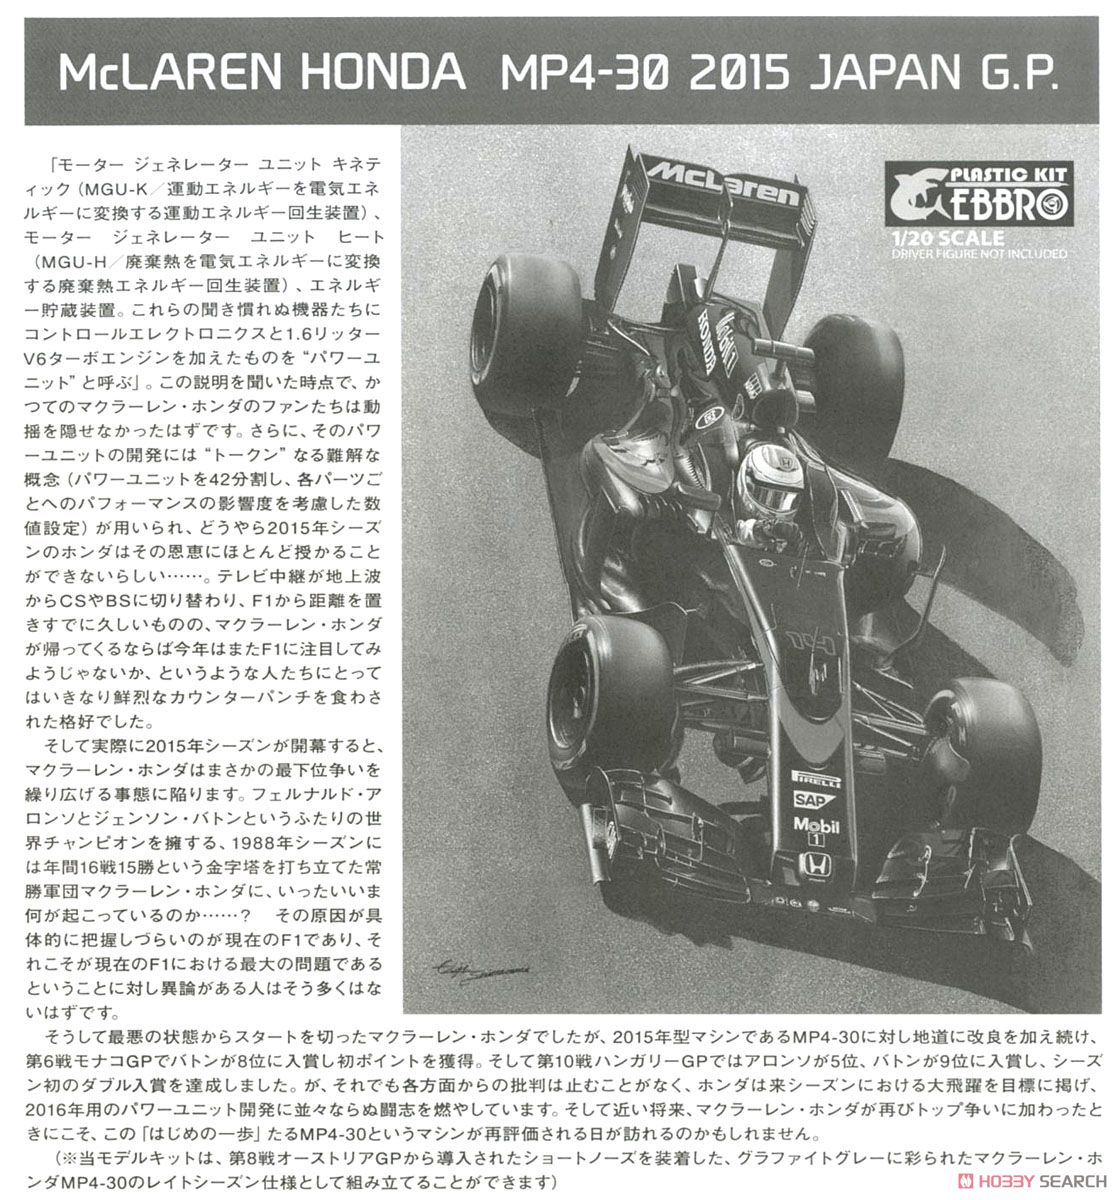 McLAREN HONDA MP4-30 Japan GP (プラモデル) 解説1